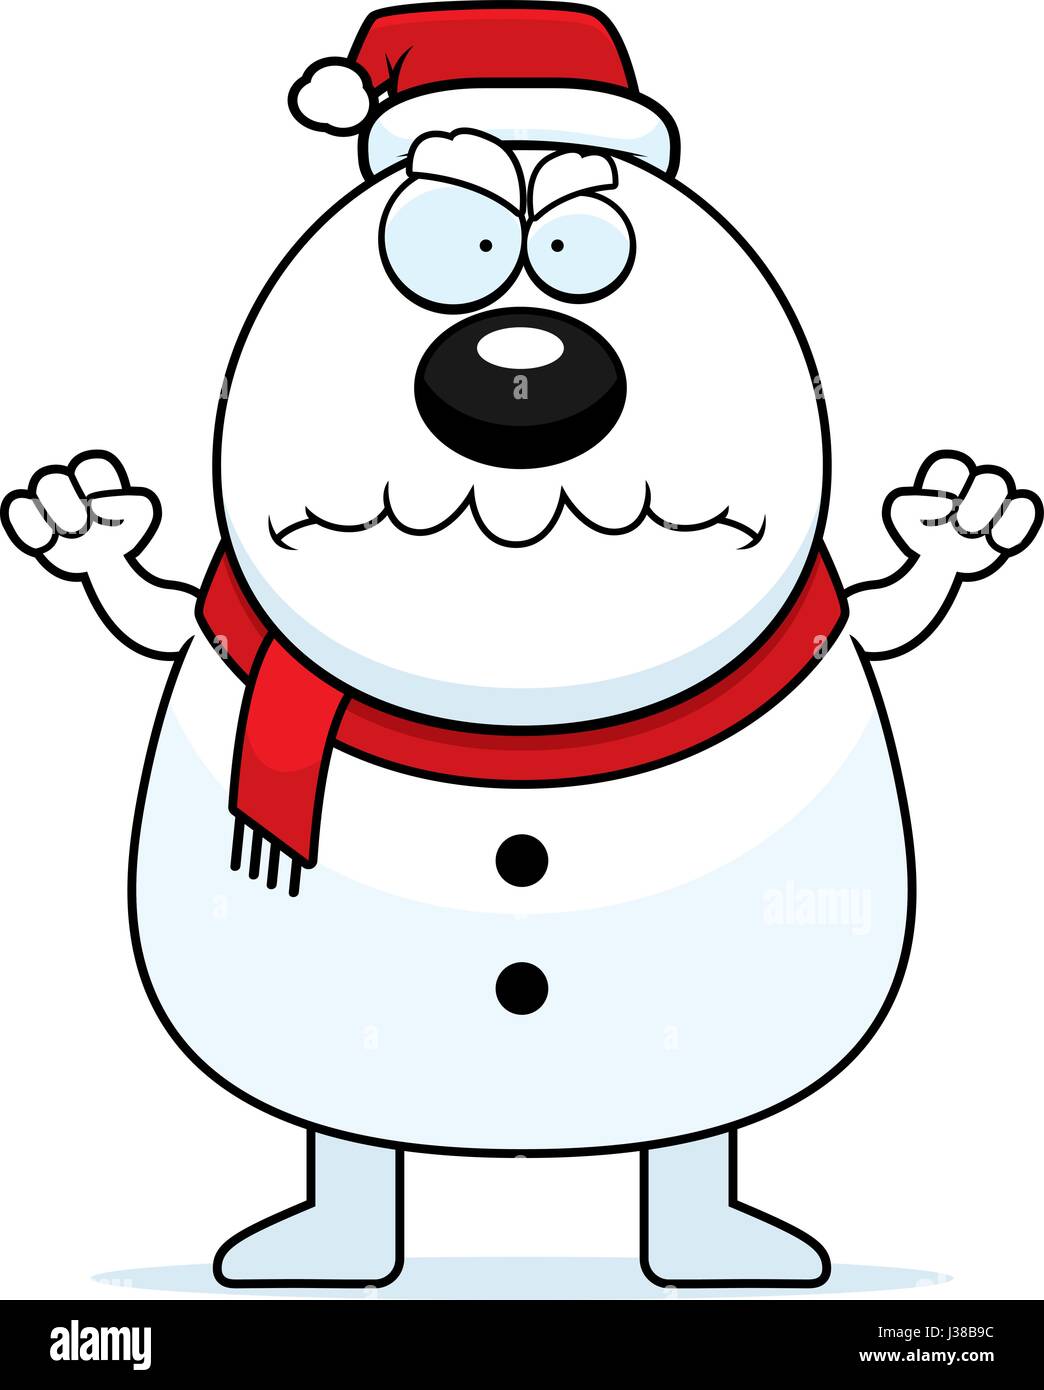 A cartoon illustration of a snowman Santa Claus looking angry. Stock Vector